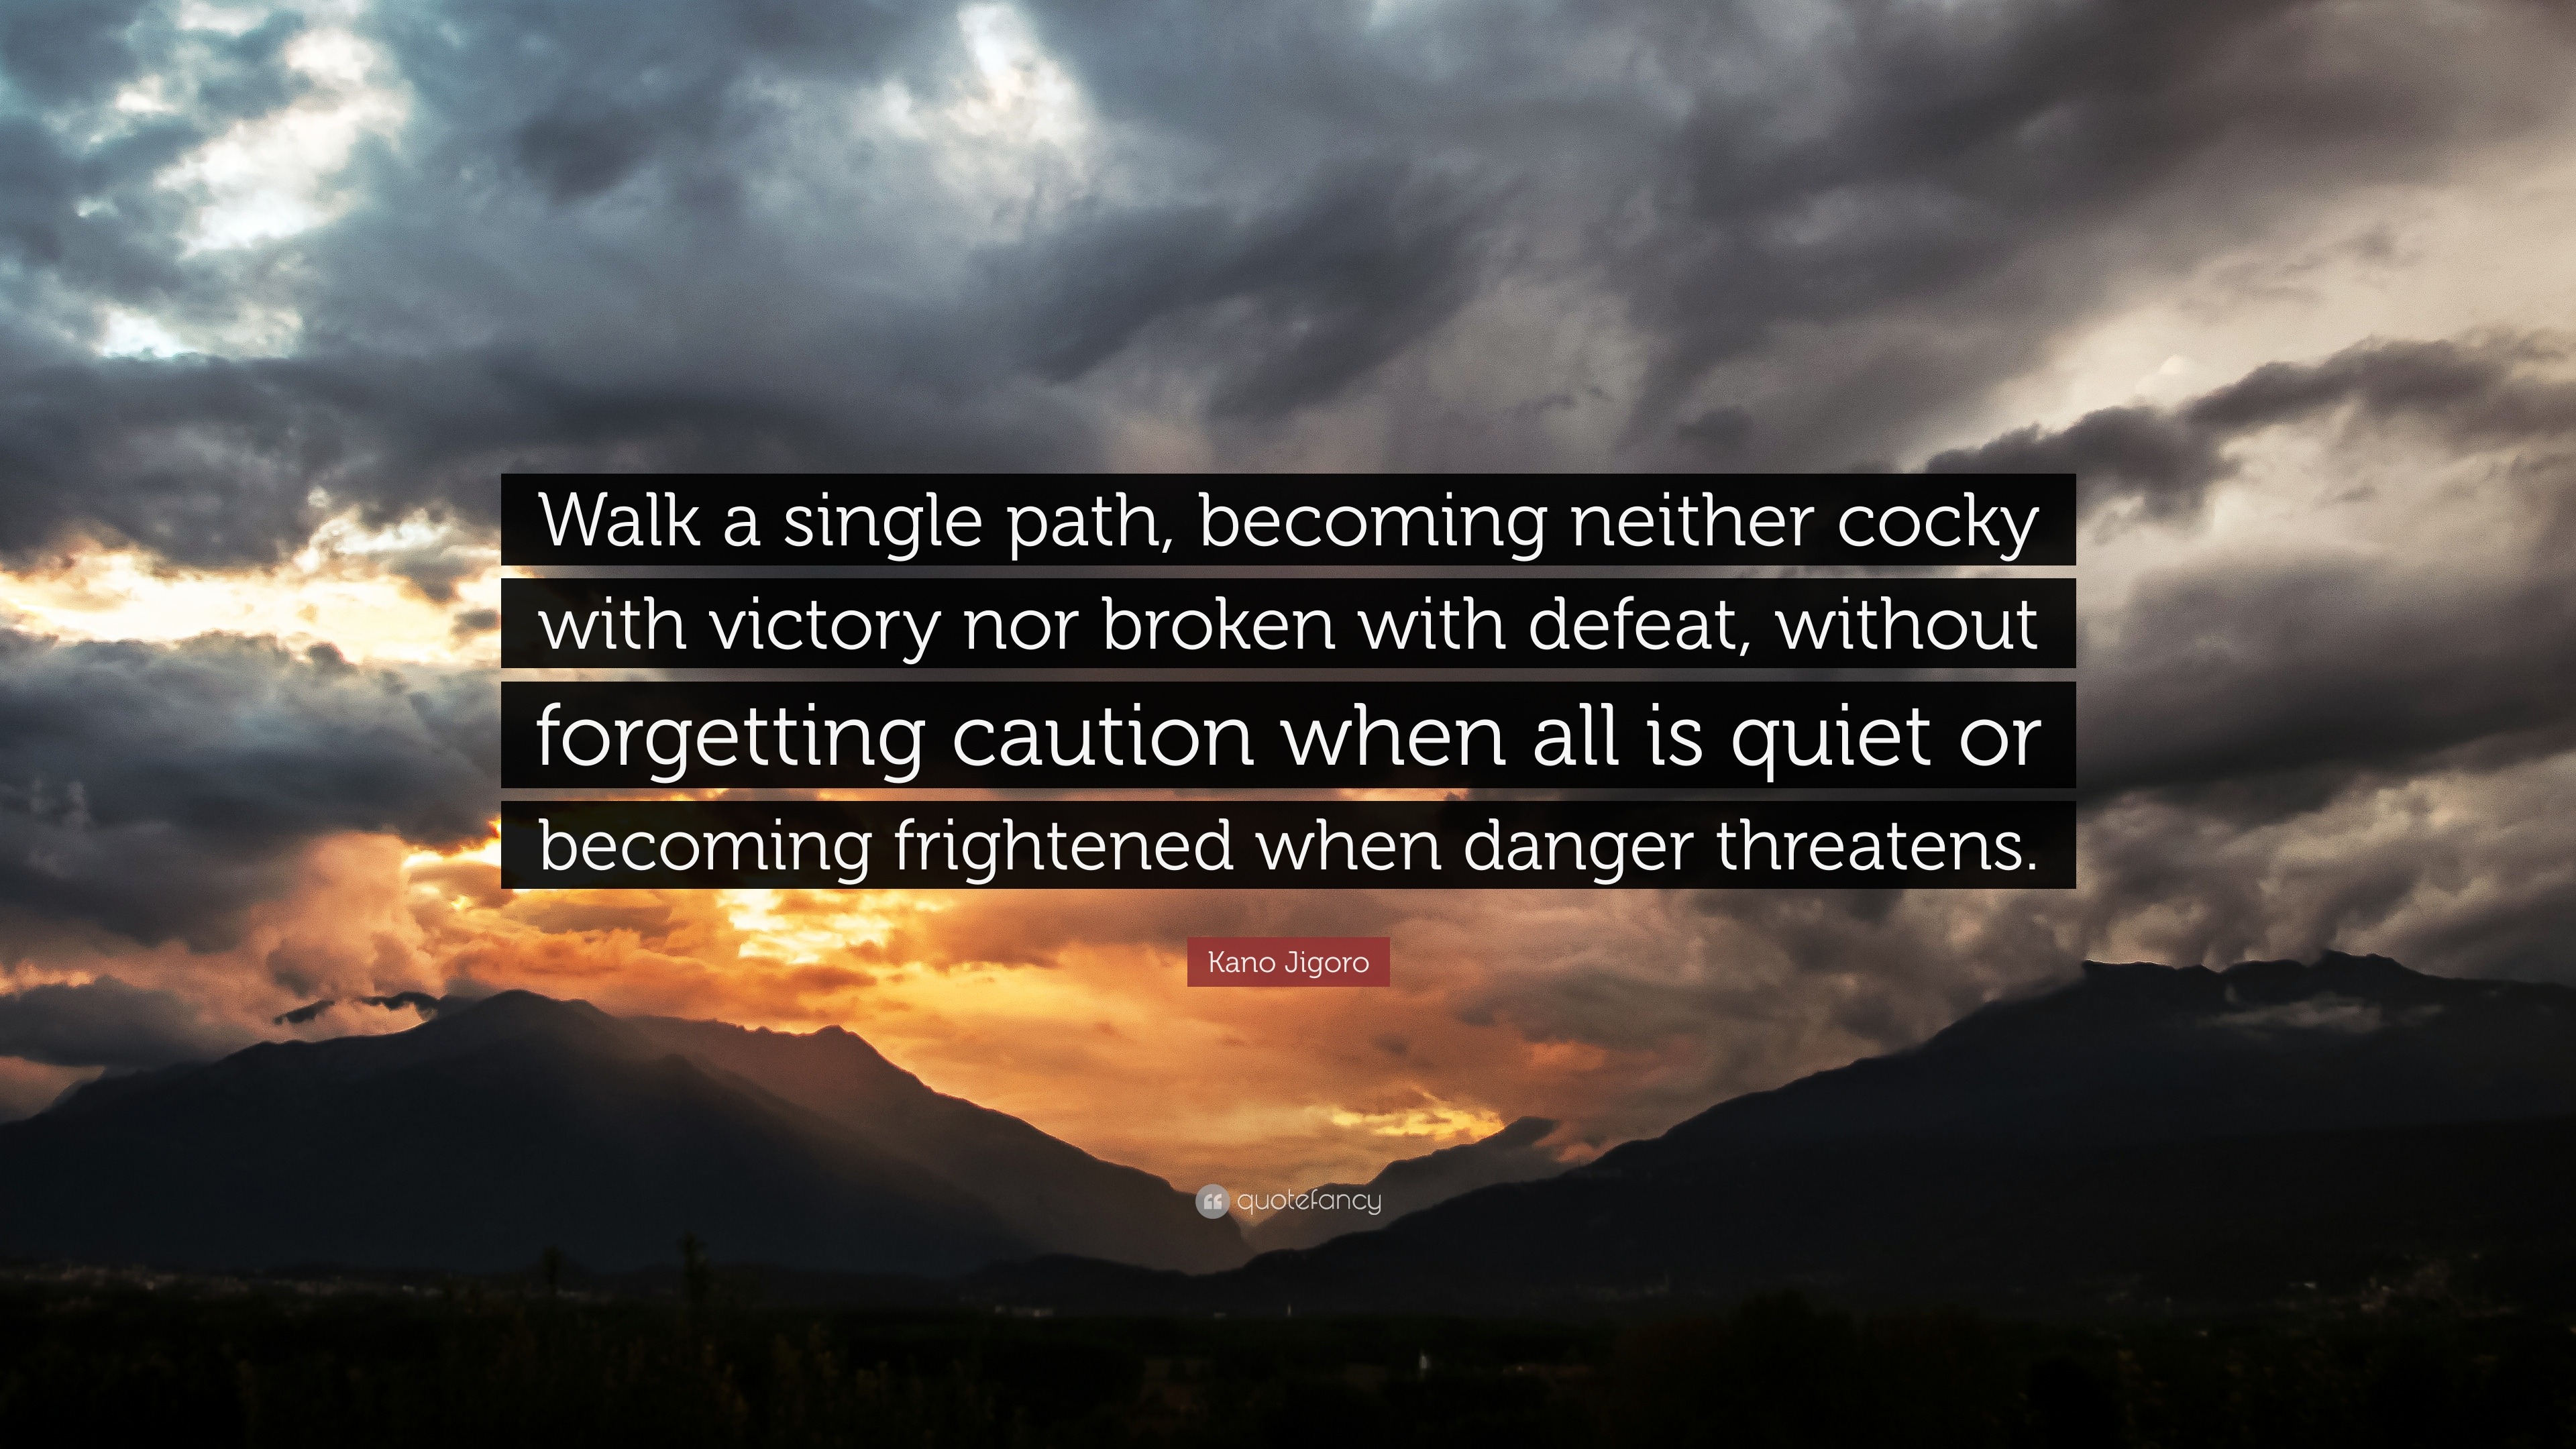 Kano Jigoro Quote: “Walk a single path